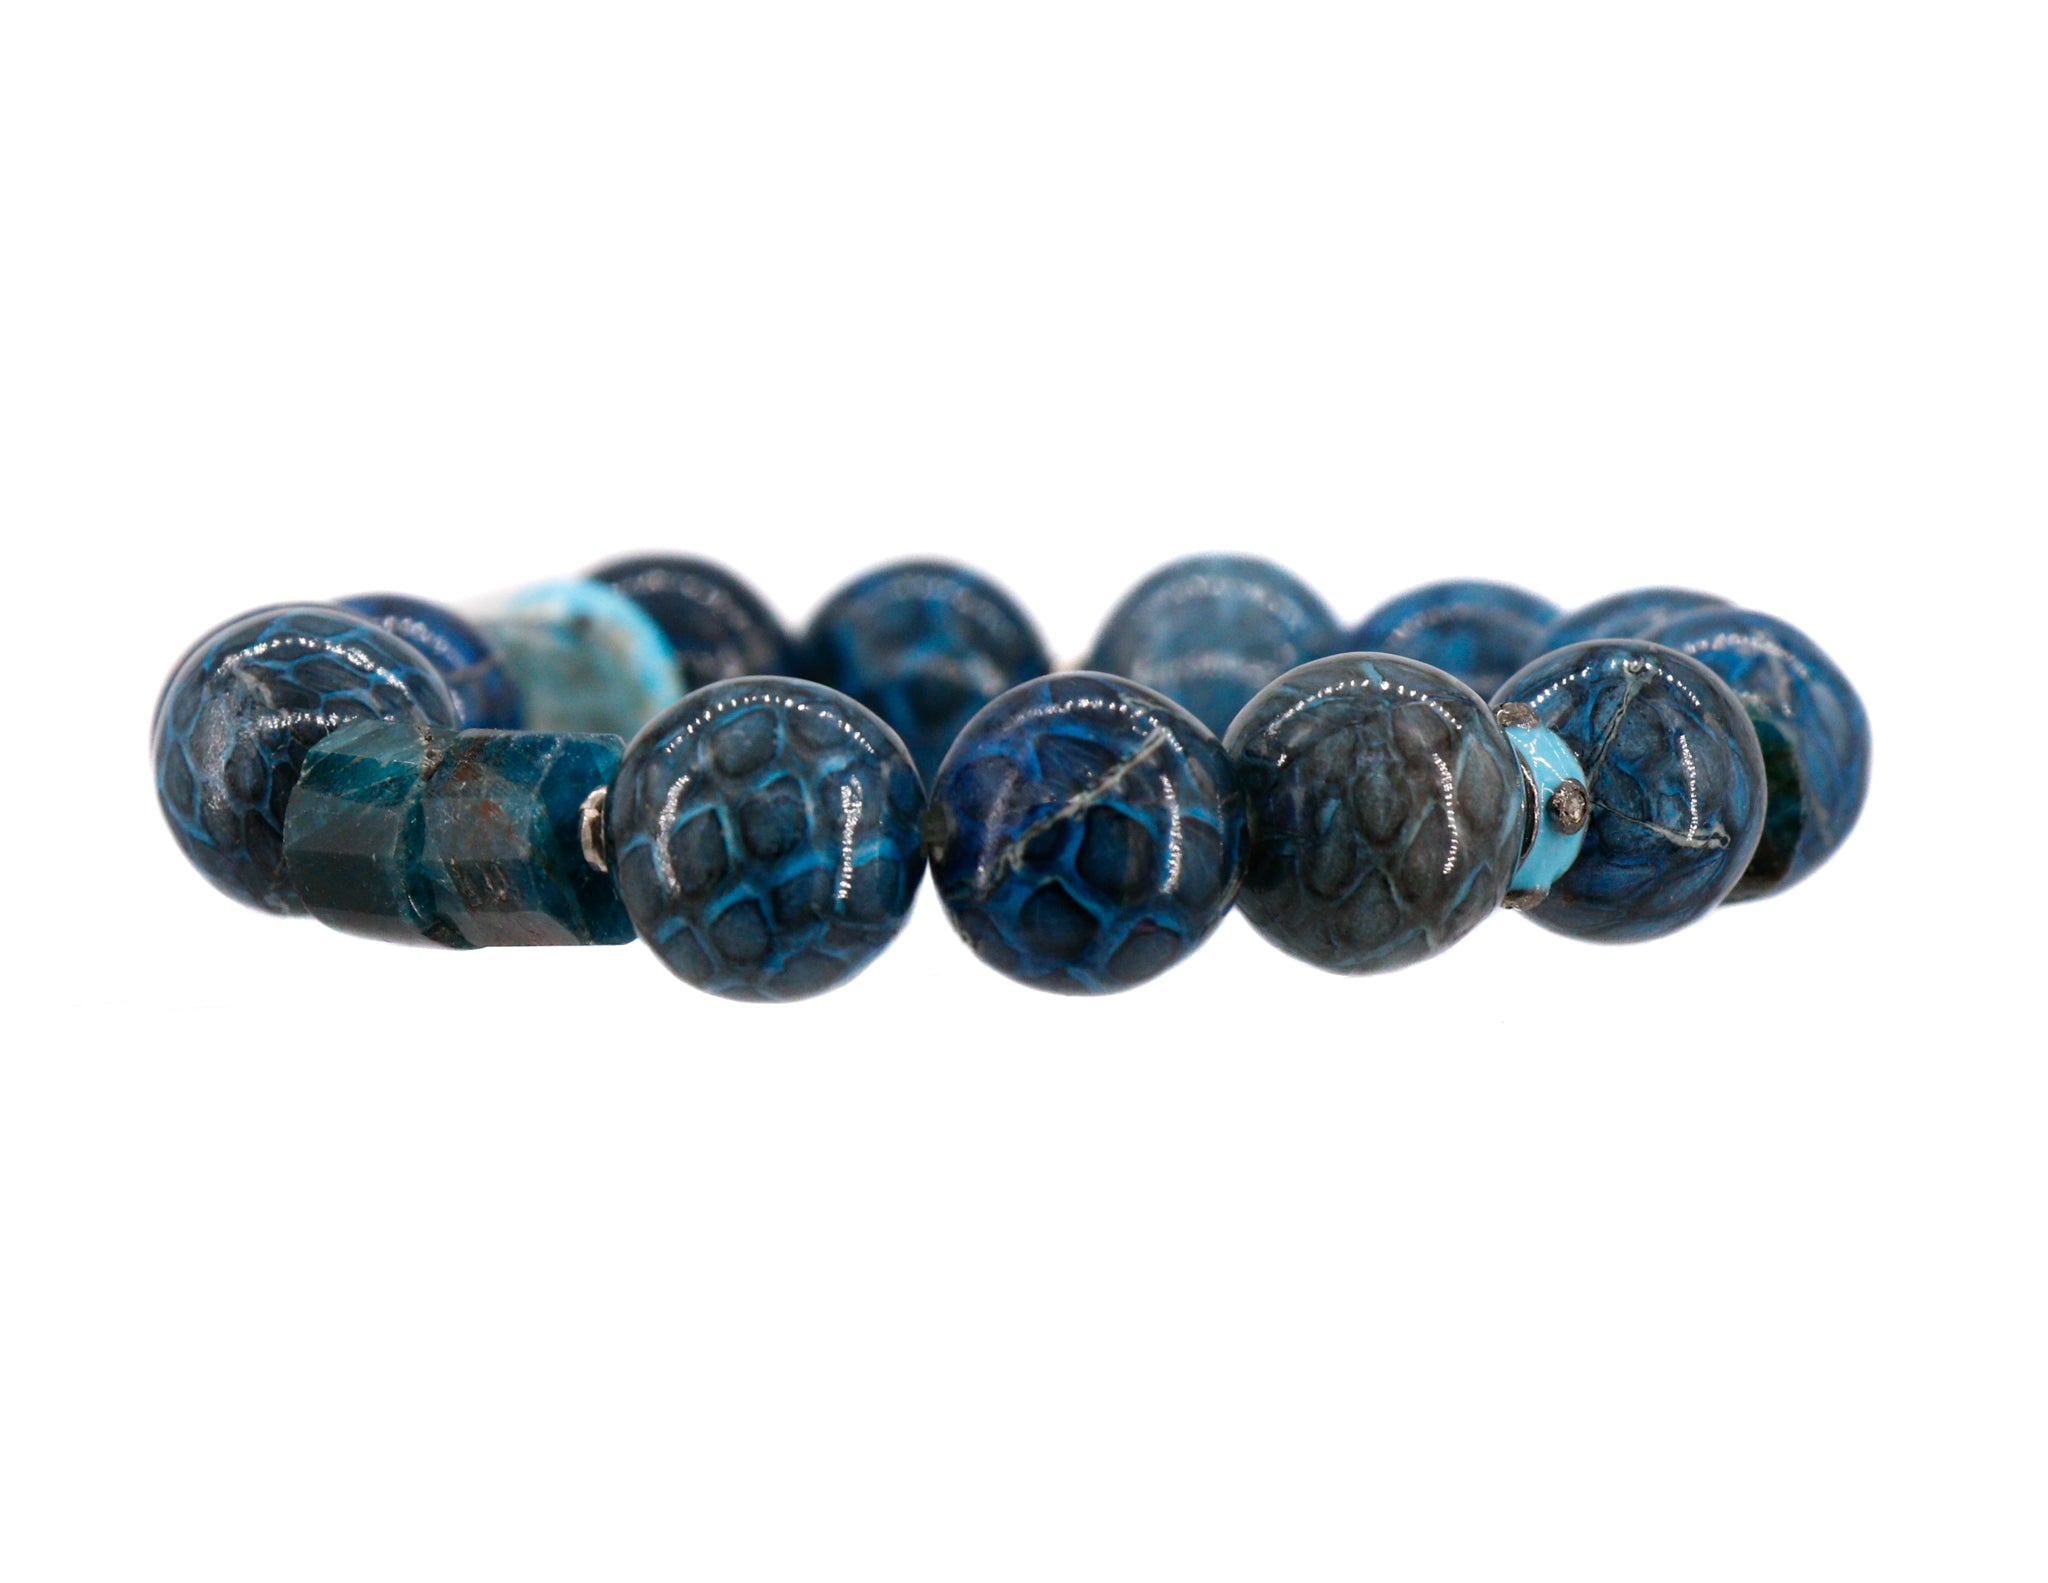 Blue snake skin patterned bracelet with turquoise bracelet